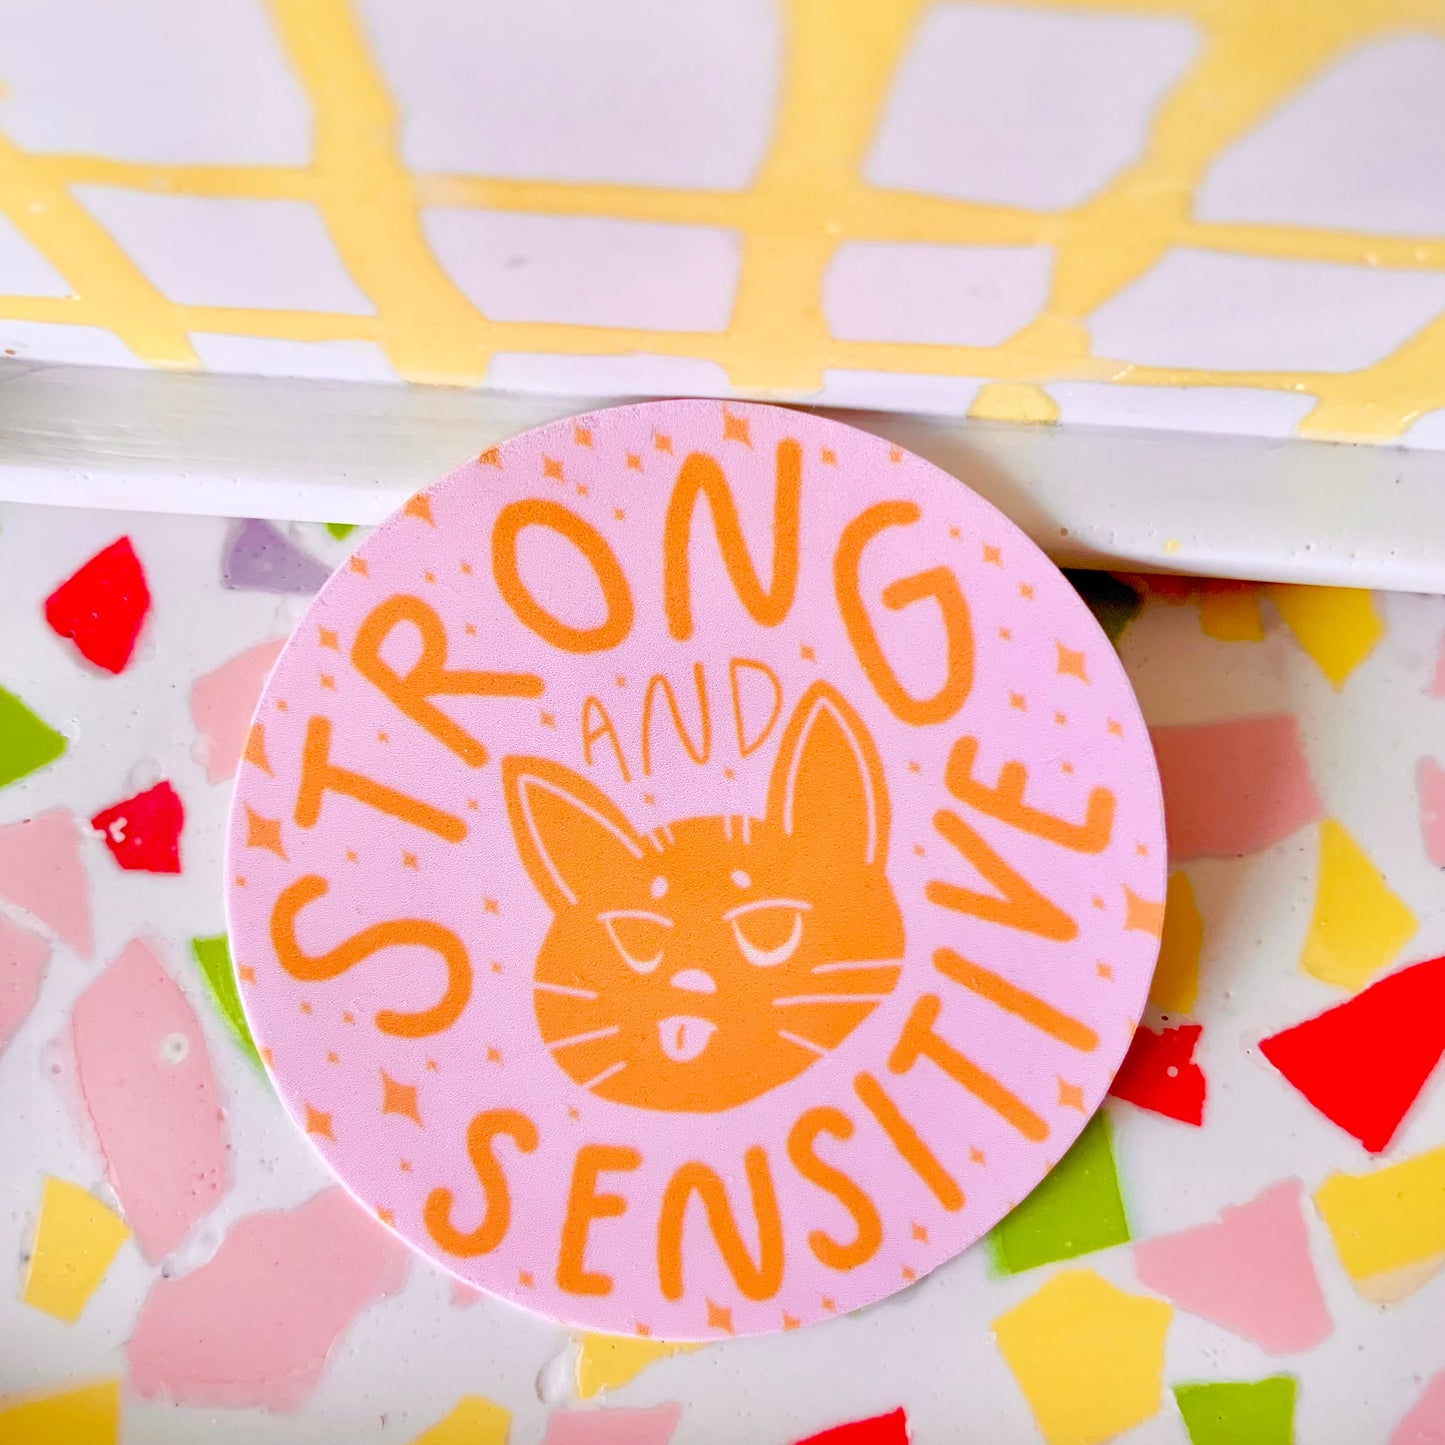 Strong & Sensitive Cat 8x8" Art Print